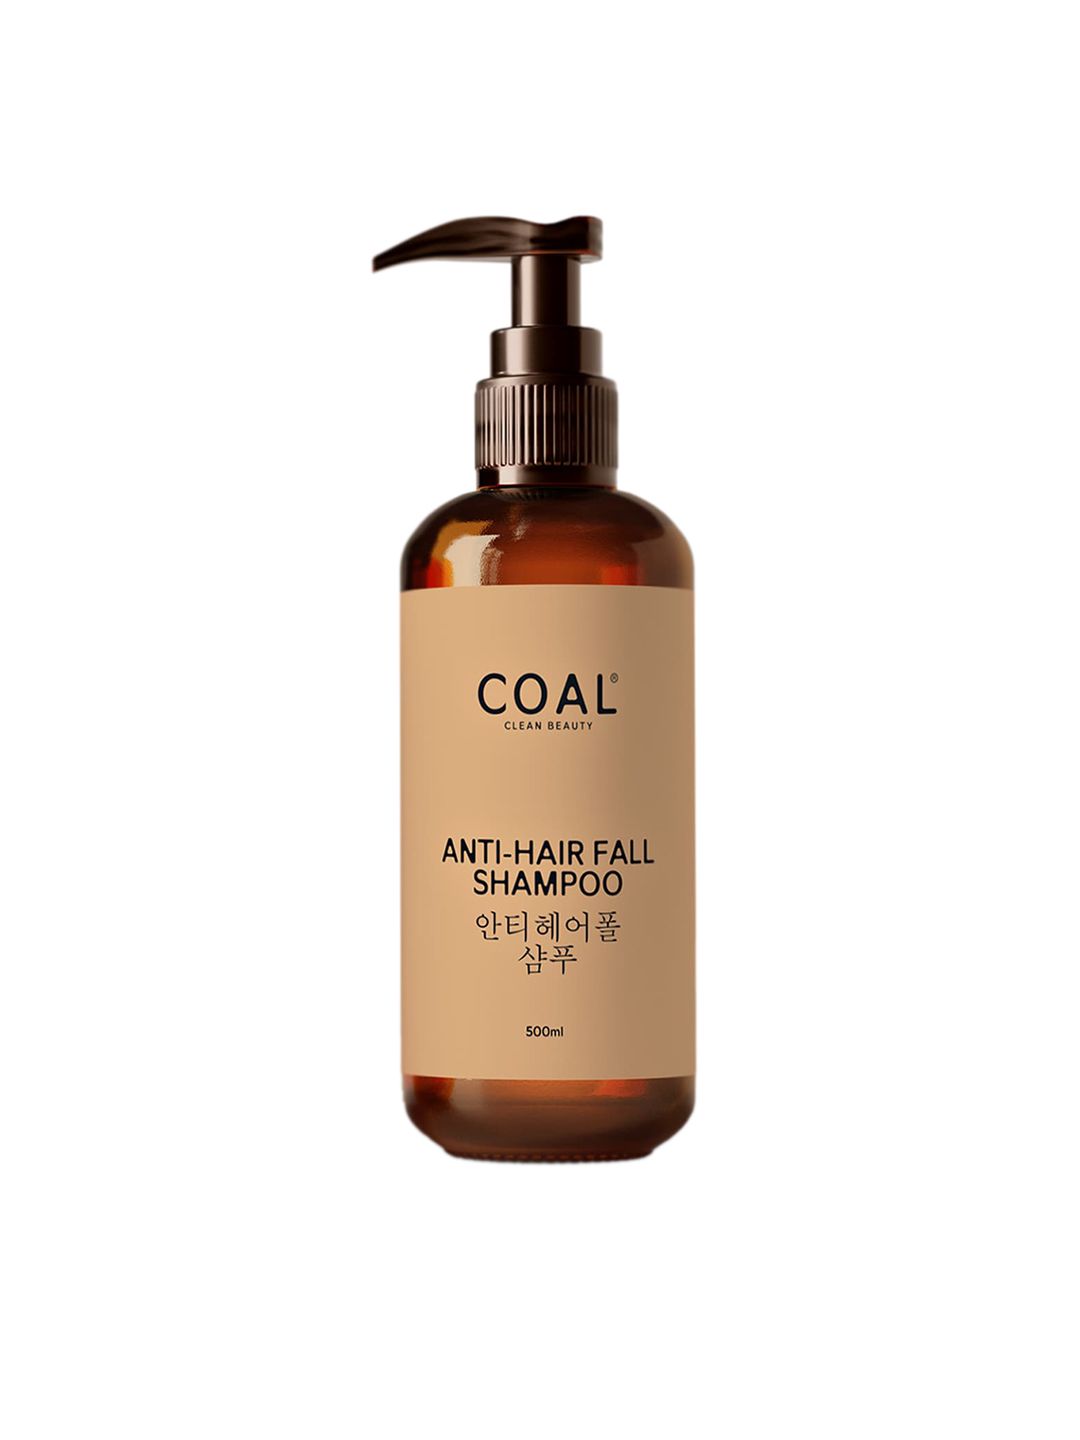 COAL CLEAN BEAUTY Anti-Hair Fall Shampoo 500ml Price in India